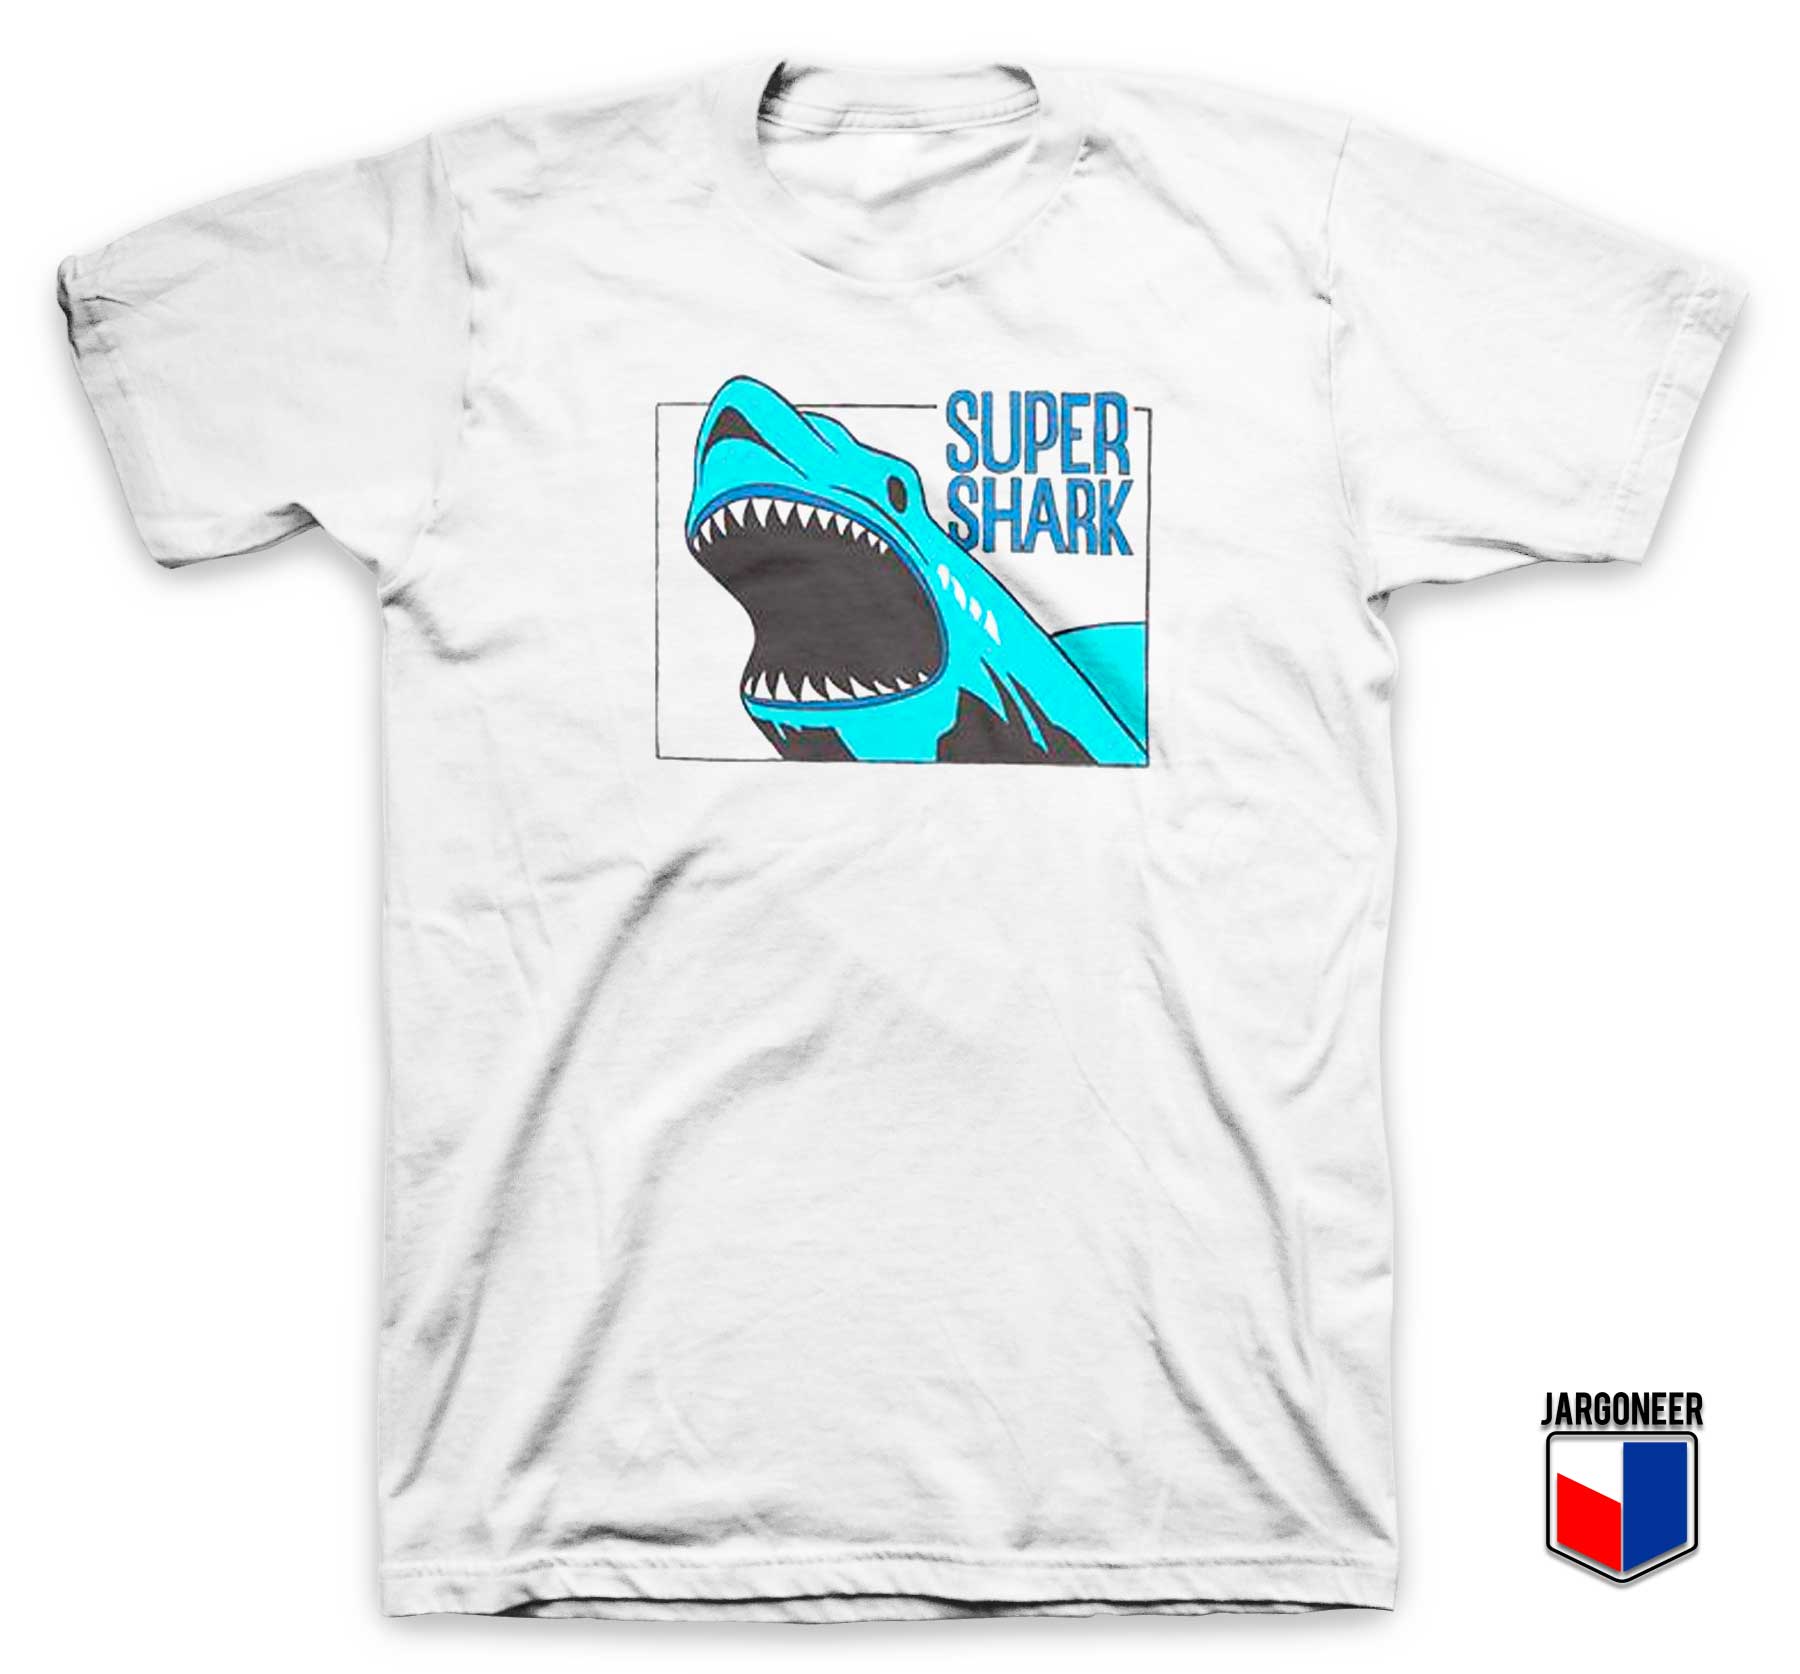 Super Shark T Shirt - Shop Unique Graphic Cool Shirt Designs